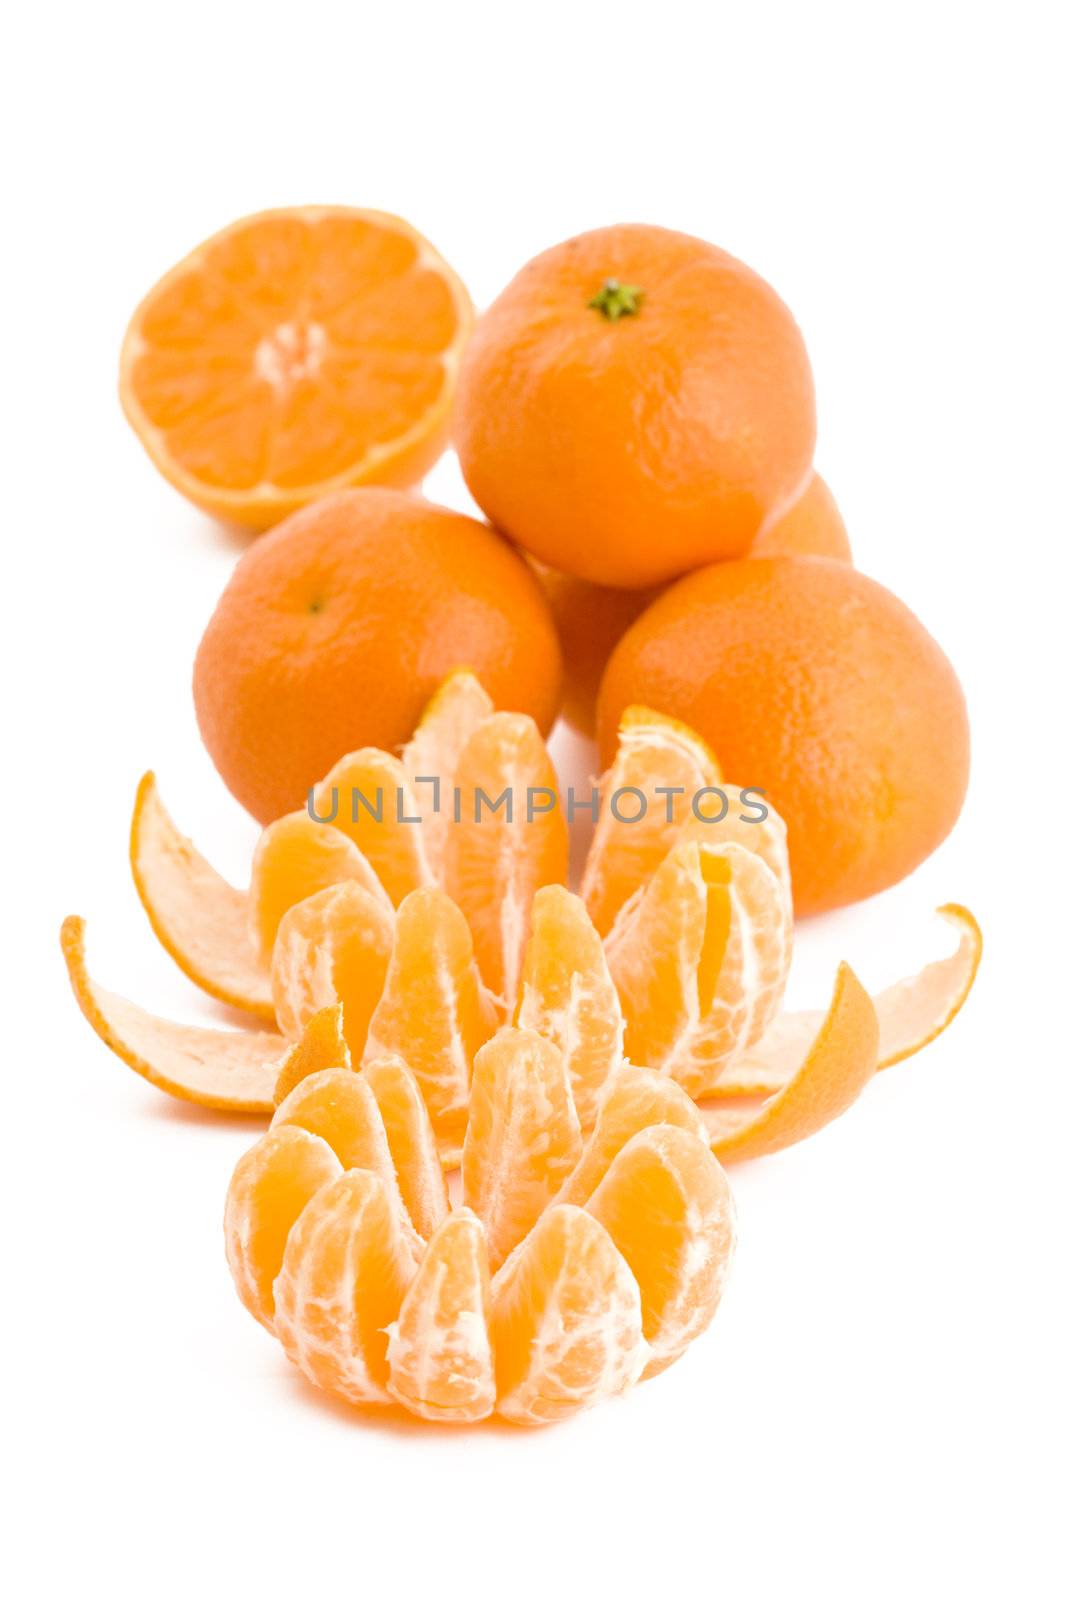 Tangerines fruits by Gbuglok